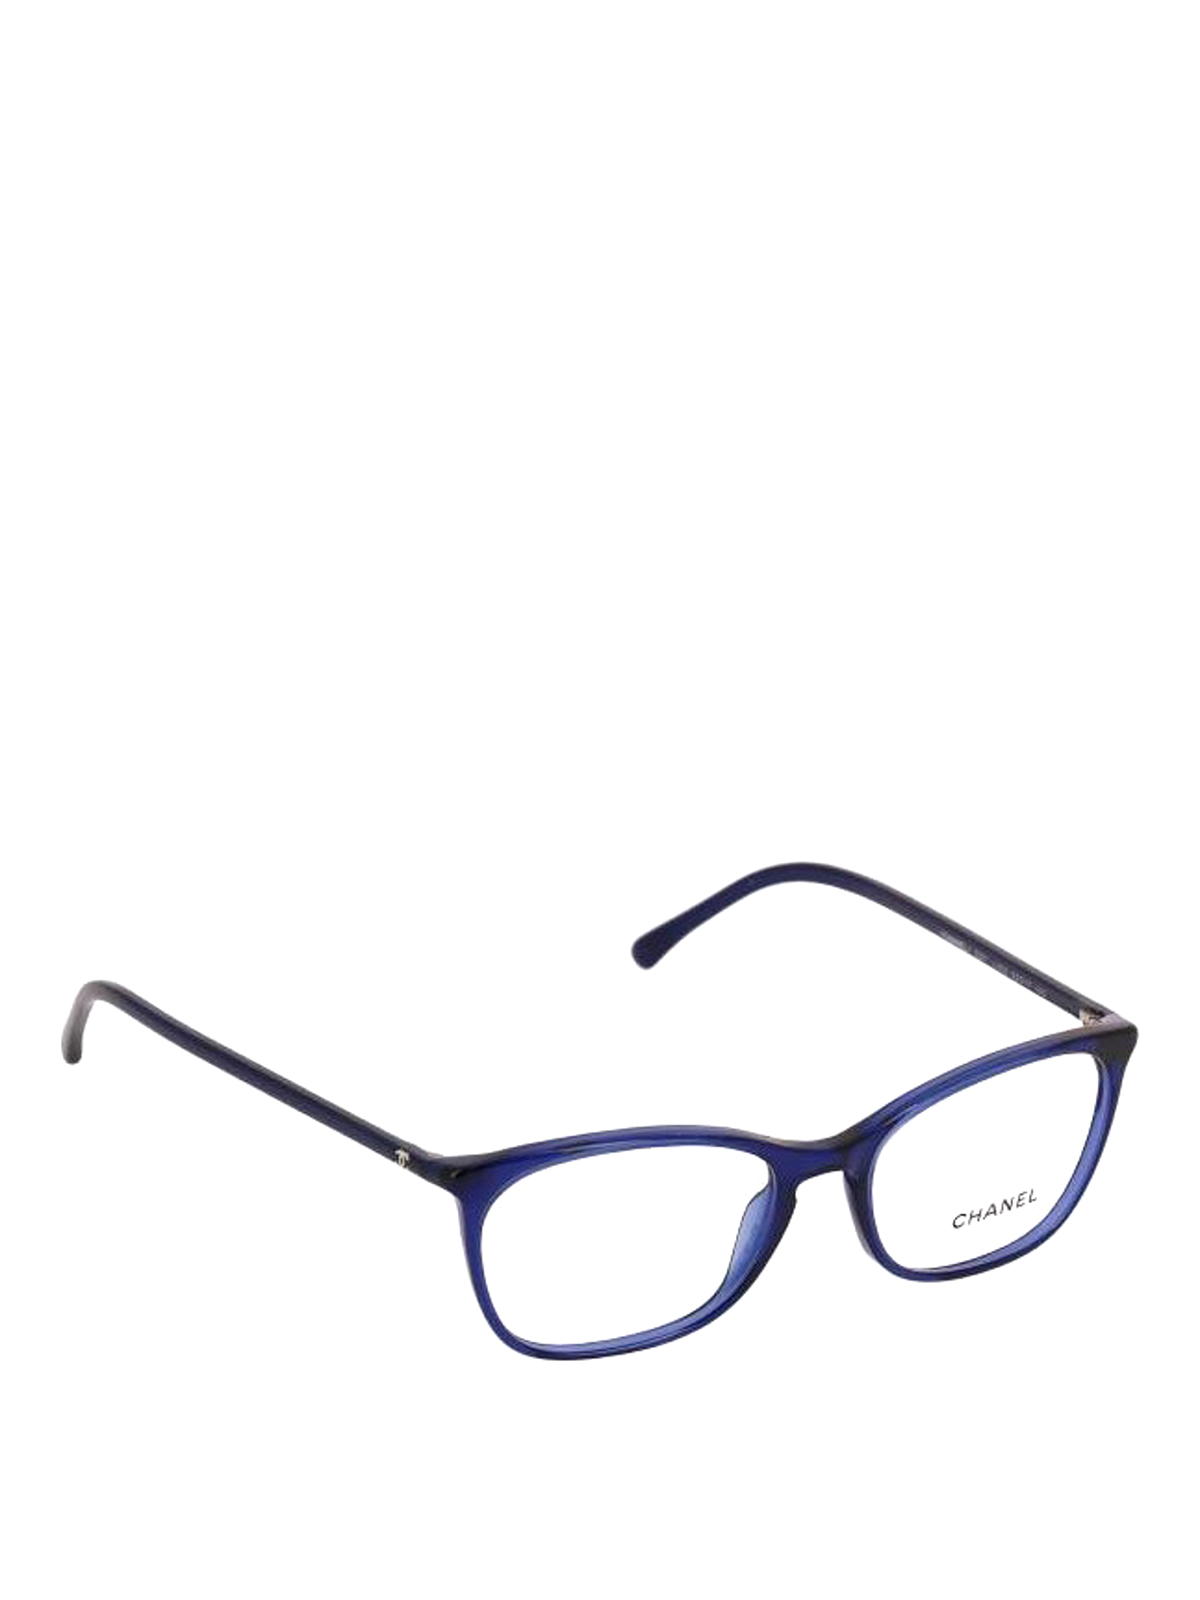 Electric blue acetate optical glasses